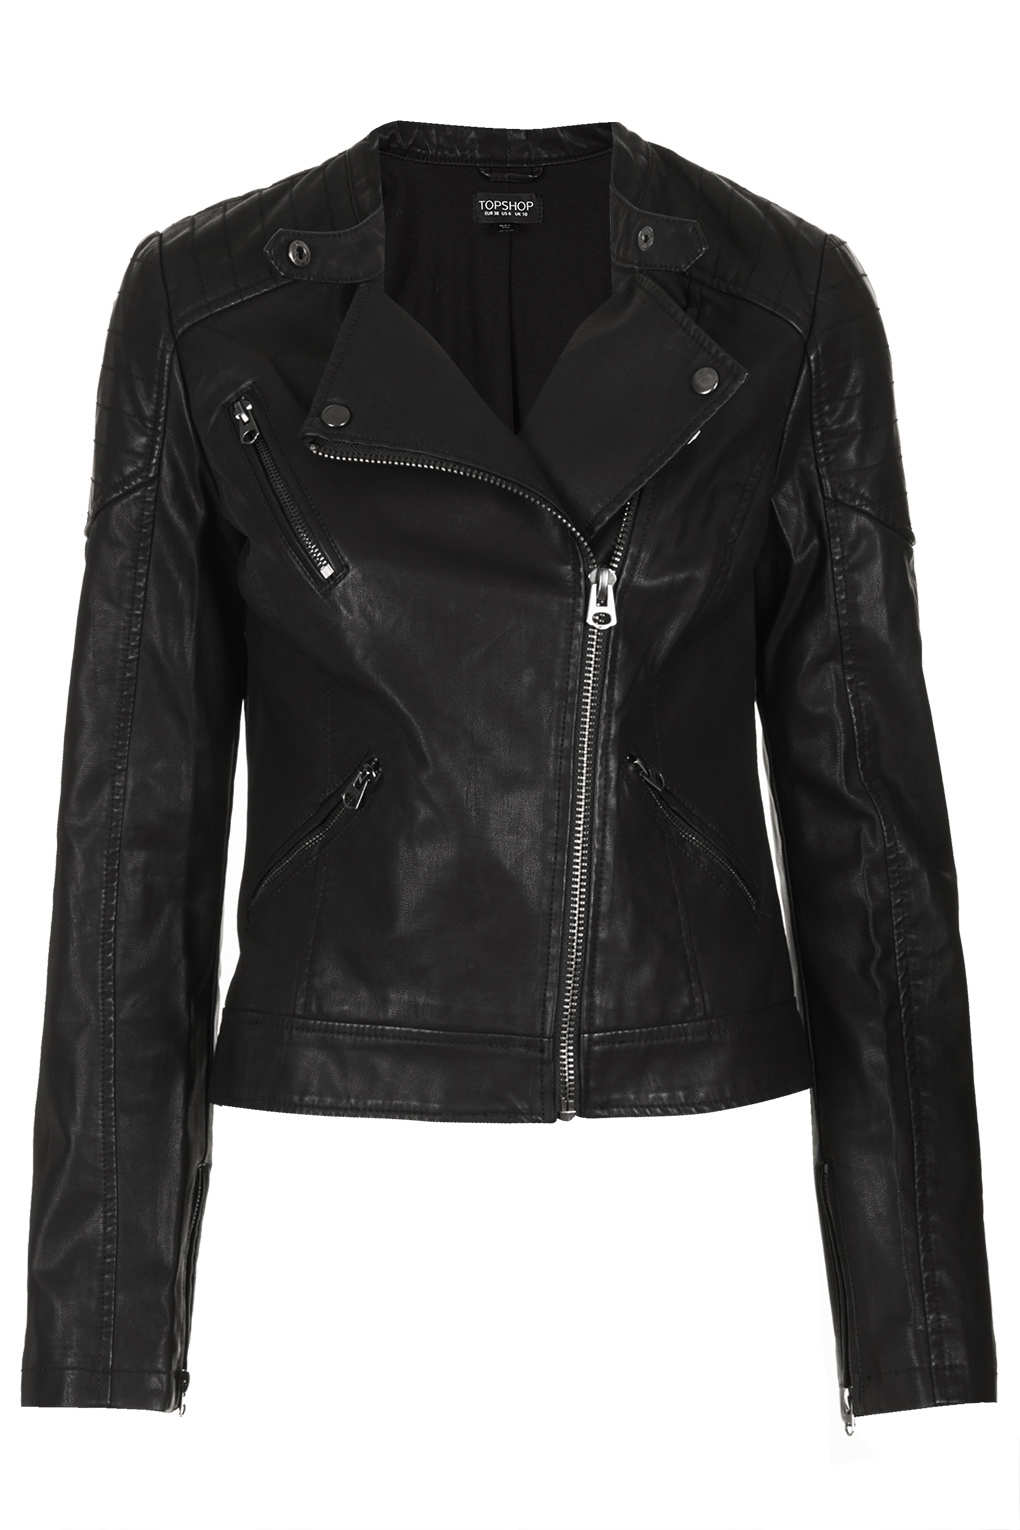 Topshop Faux Leather Biker Jacket in Black | Lyst